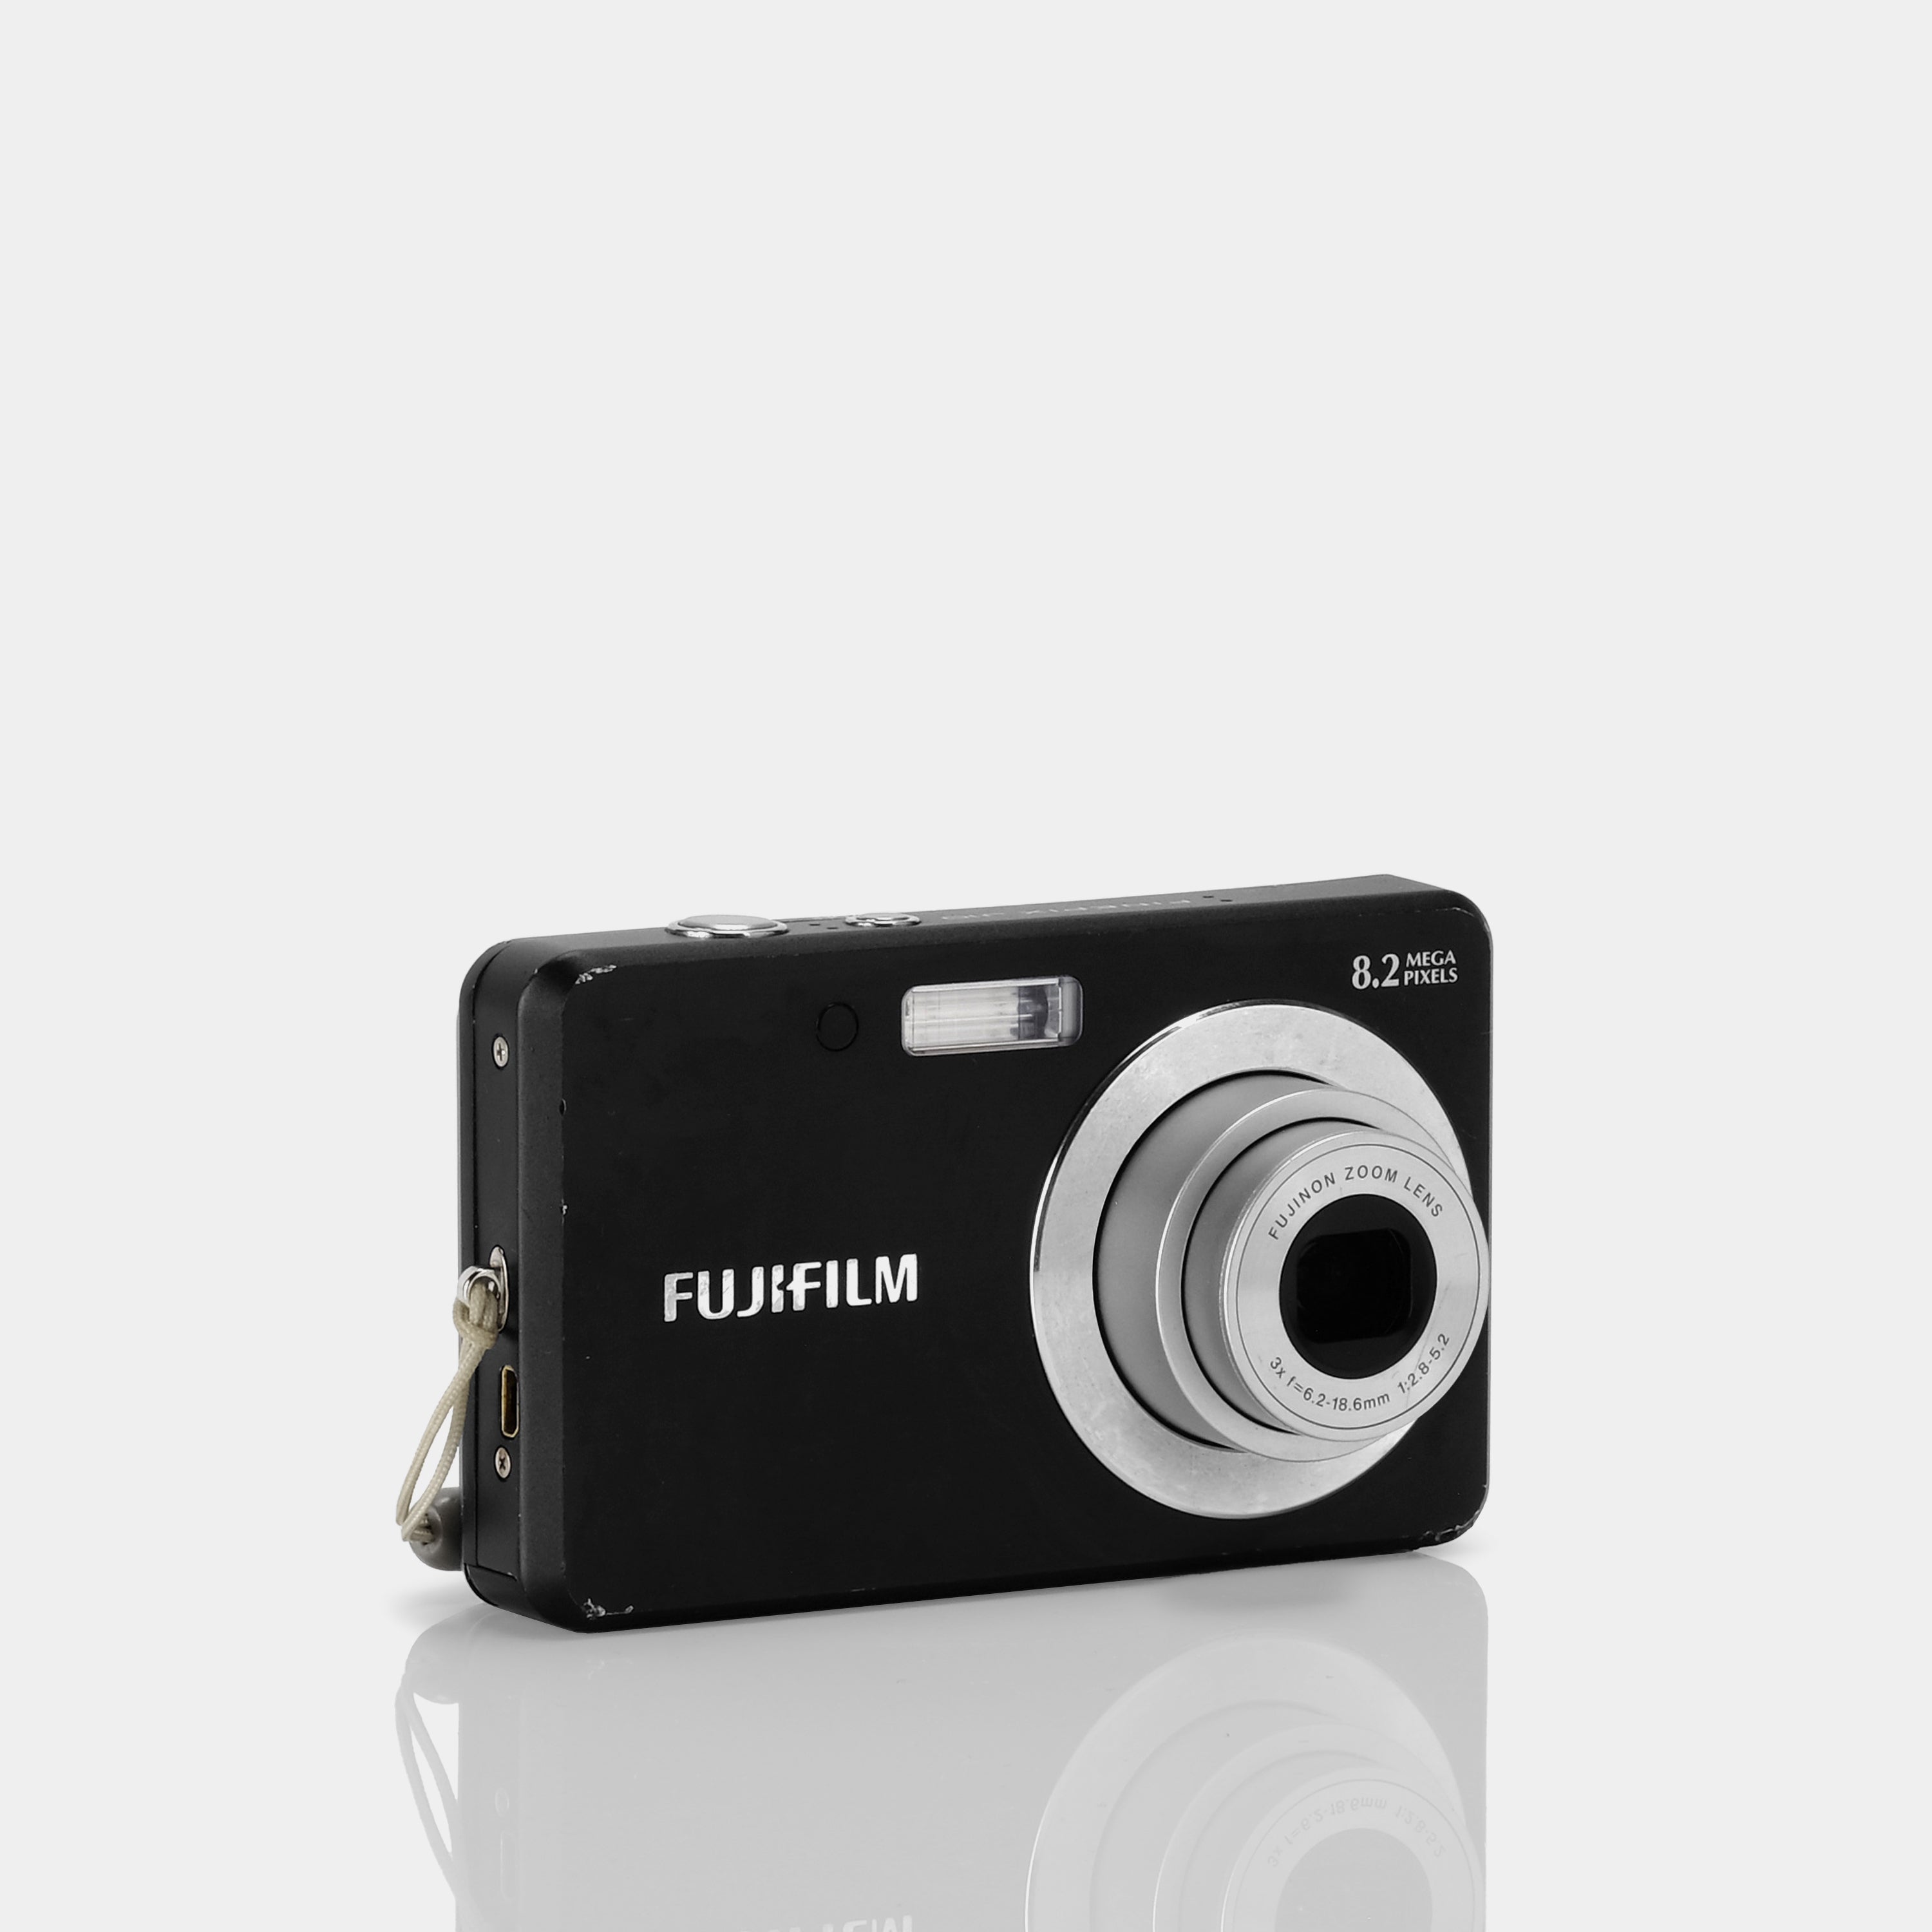 Fujifilm FinePix J10 Point and Shoot Digital Camera